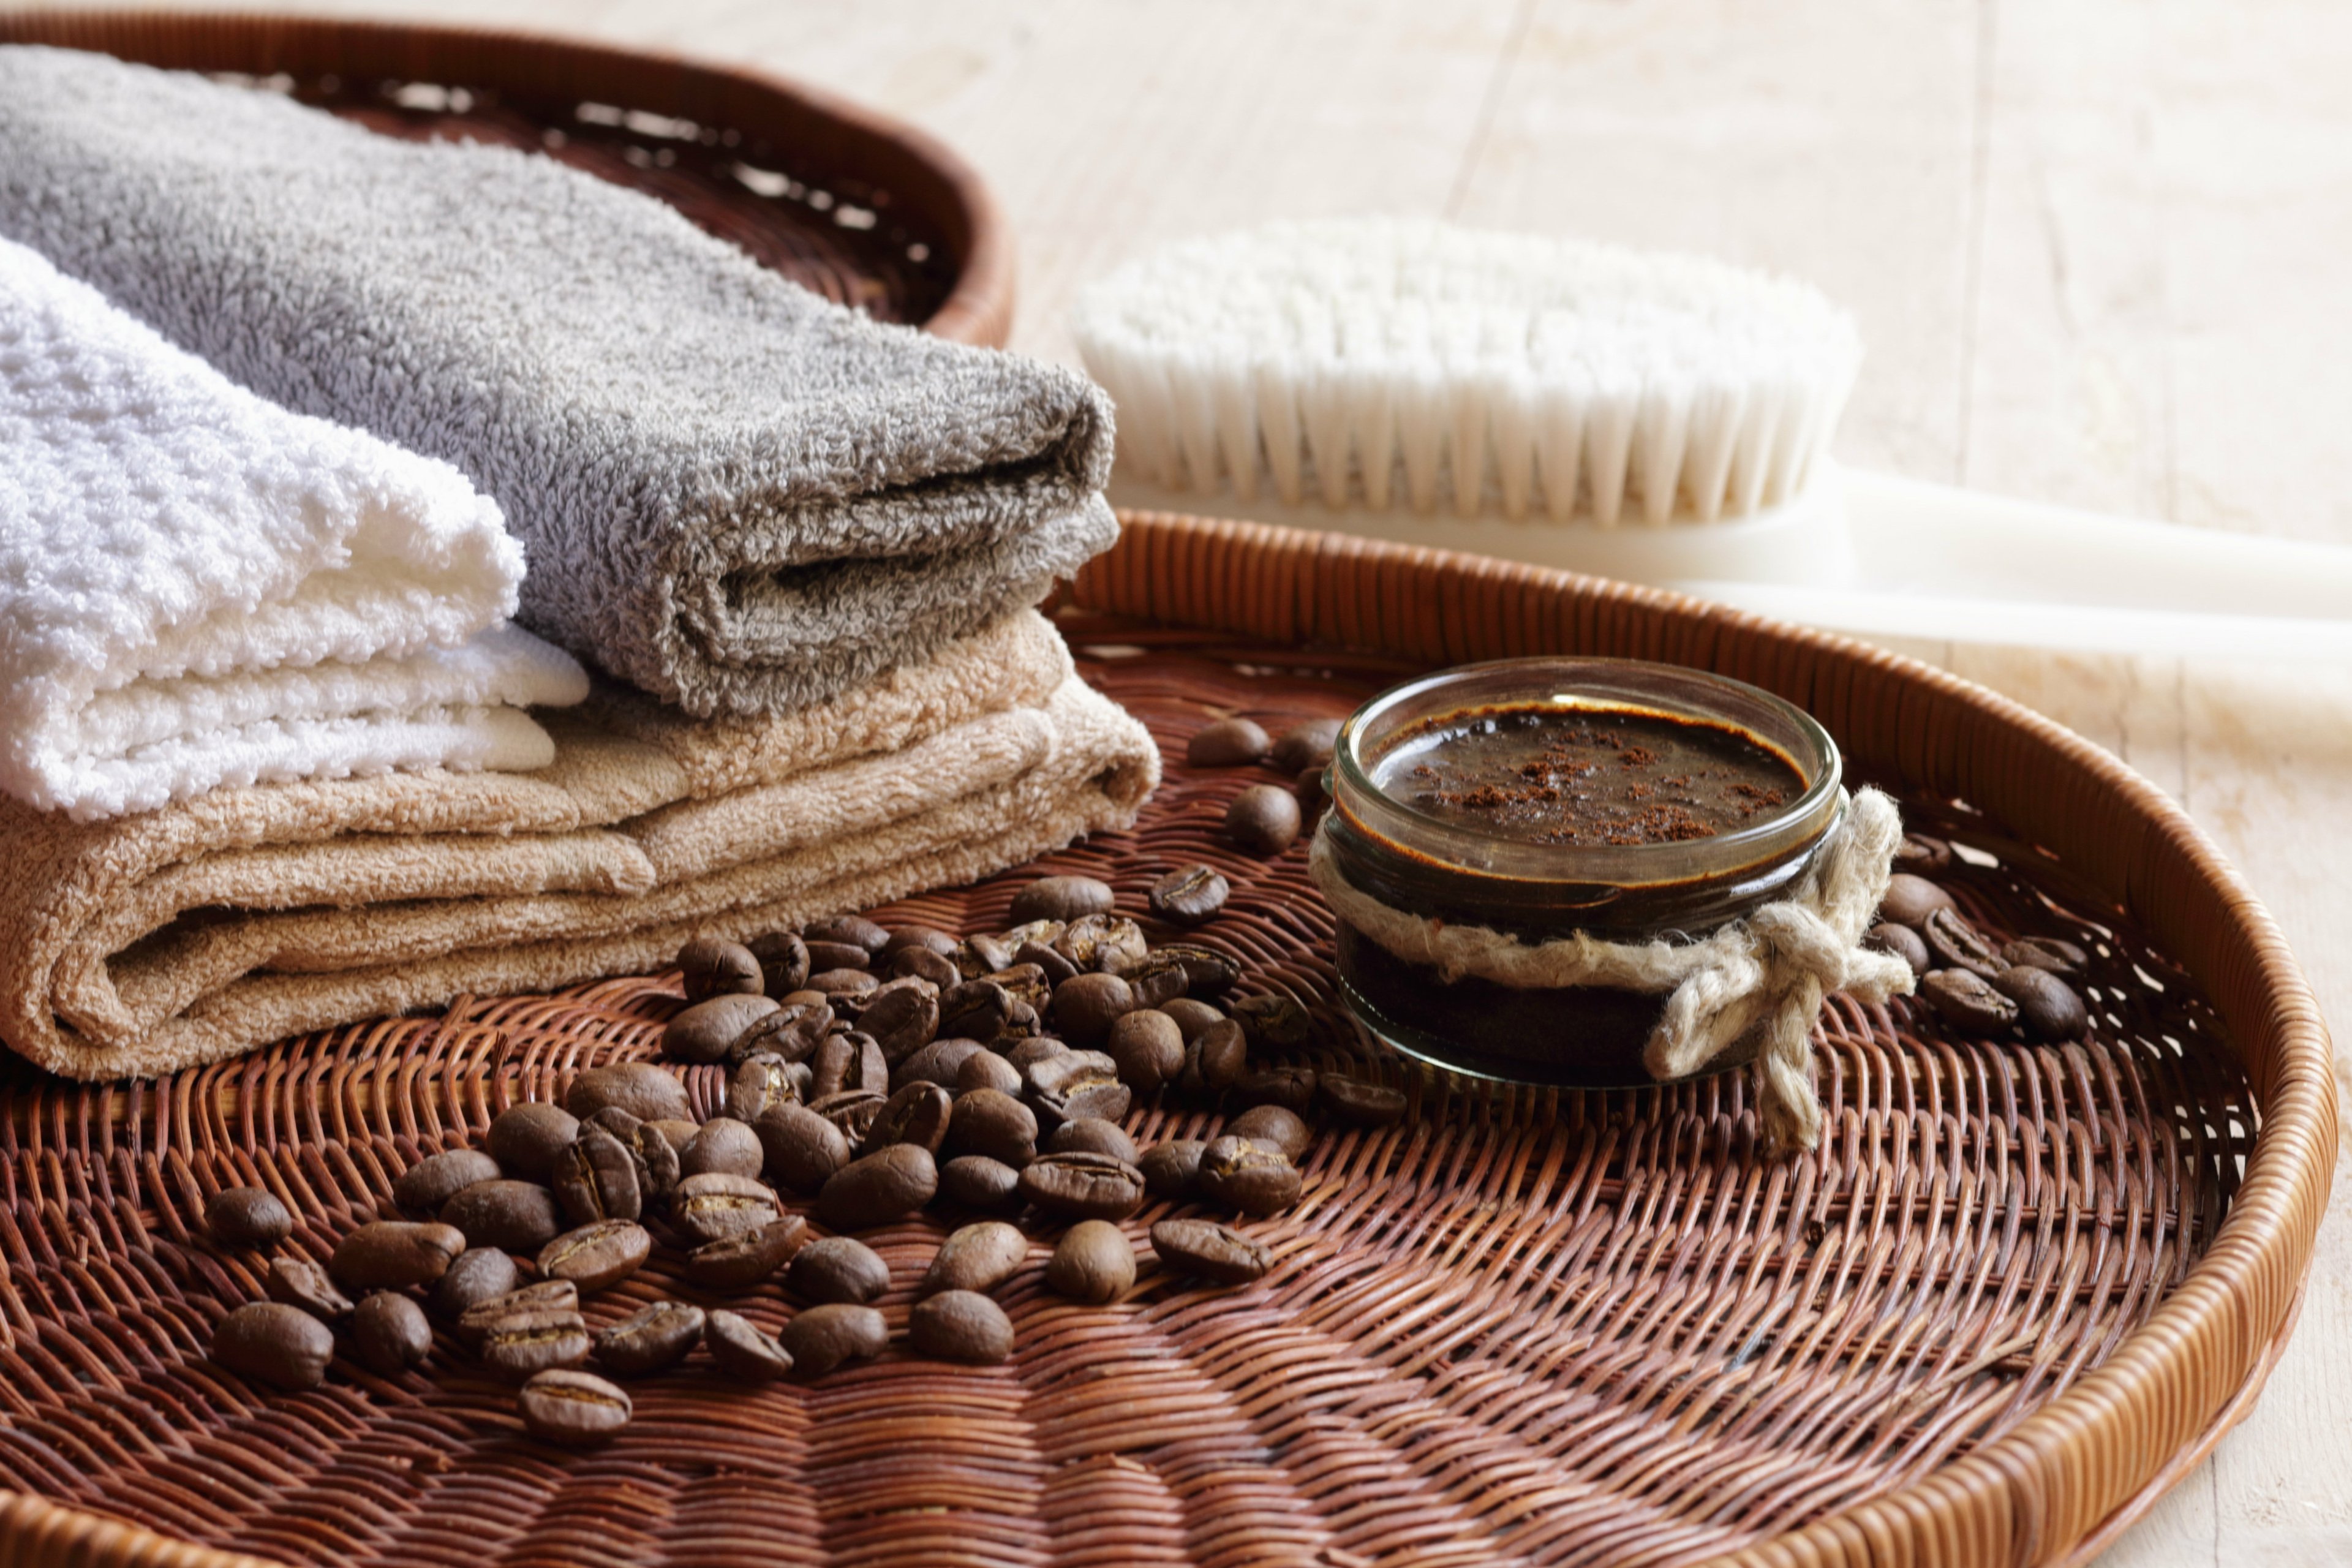 Coffee body scrub with towels and scrub brush